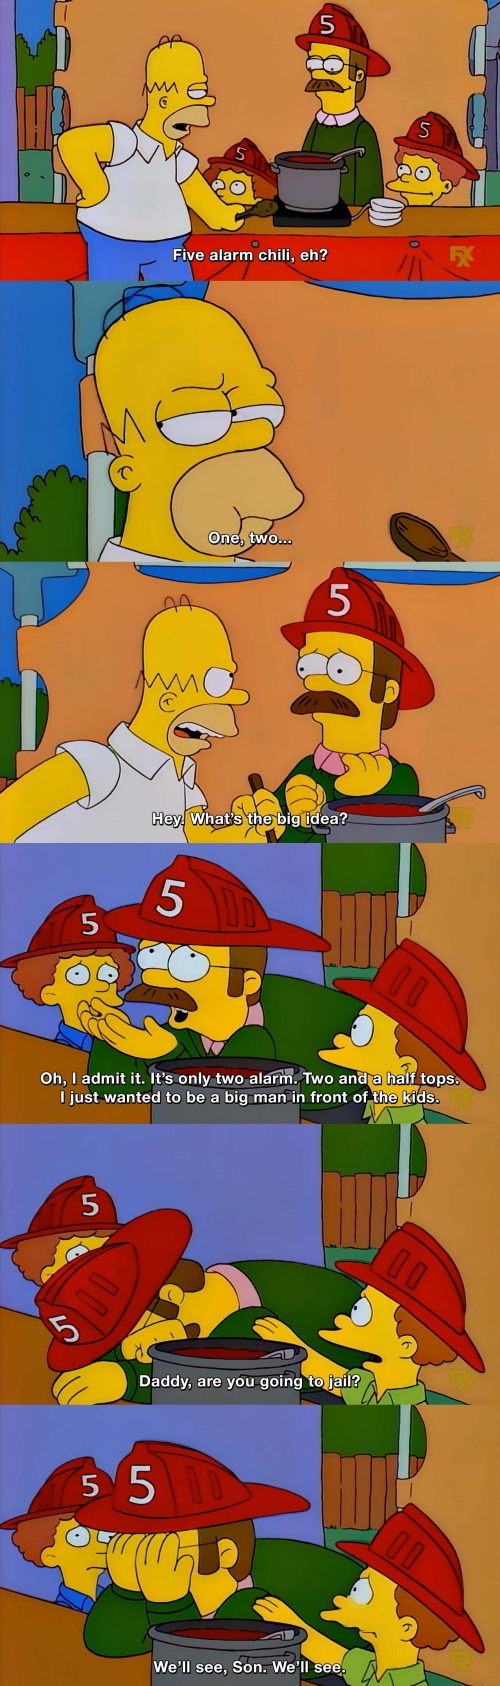 The Simpsons - Five alarm chili